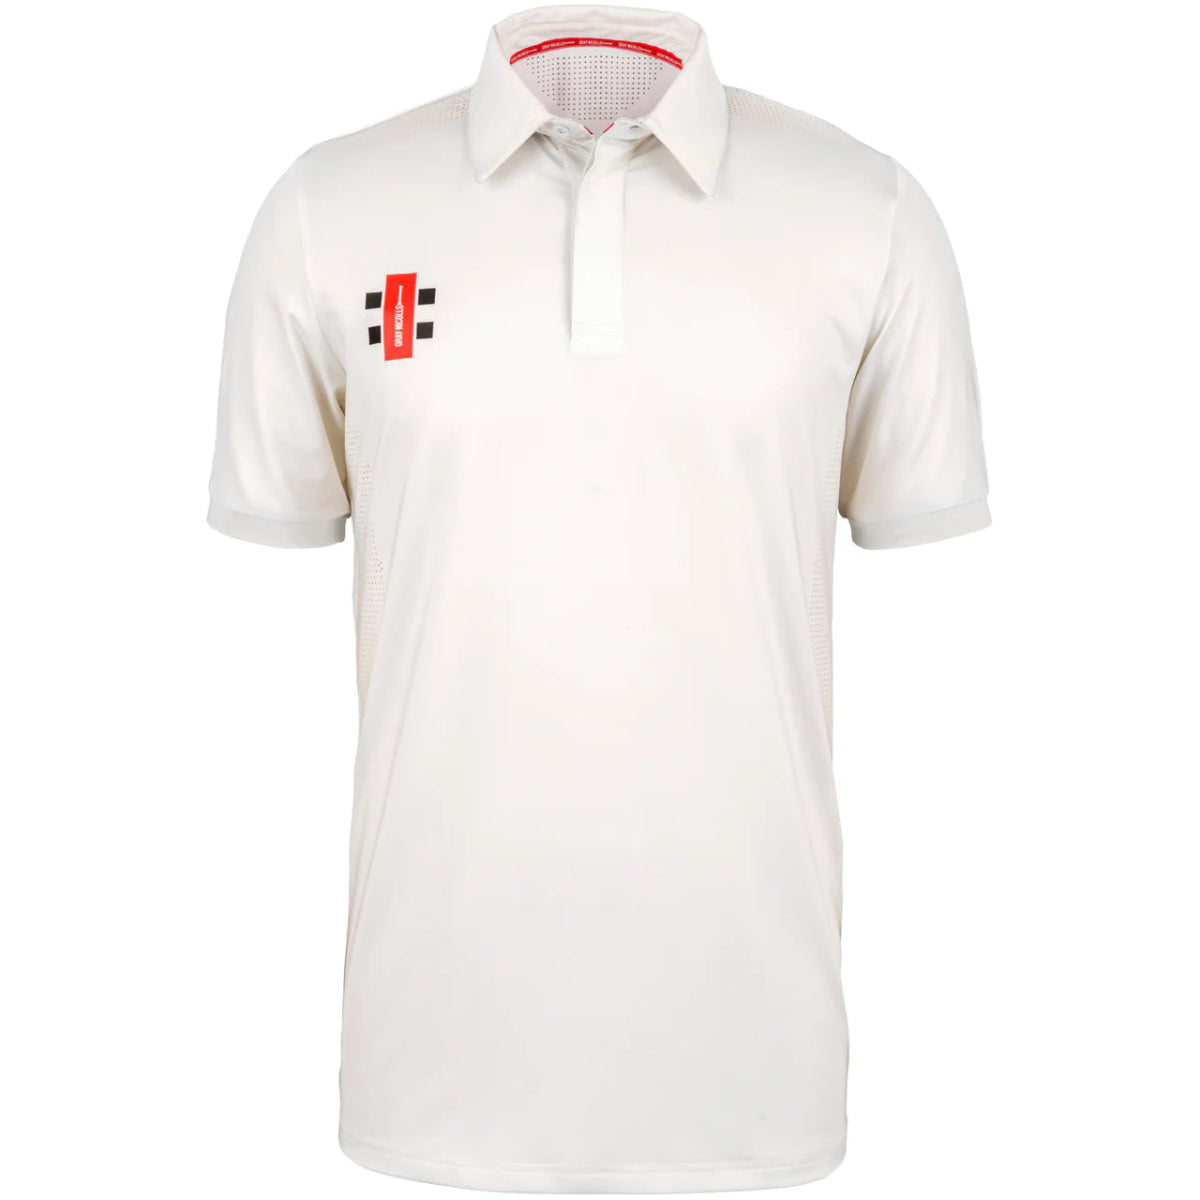 Gray Nicolls Pro Performance Short Sleeves Cricket Shirt - White